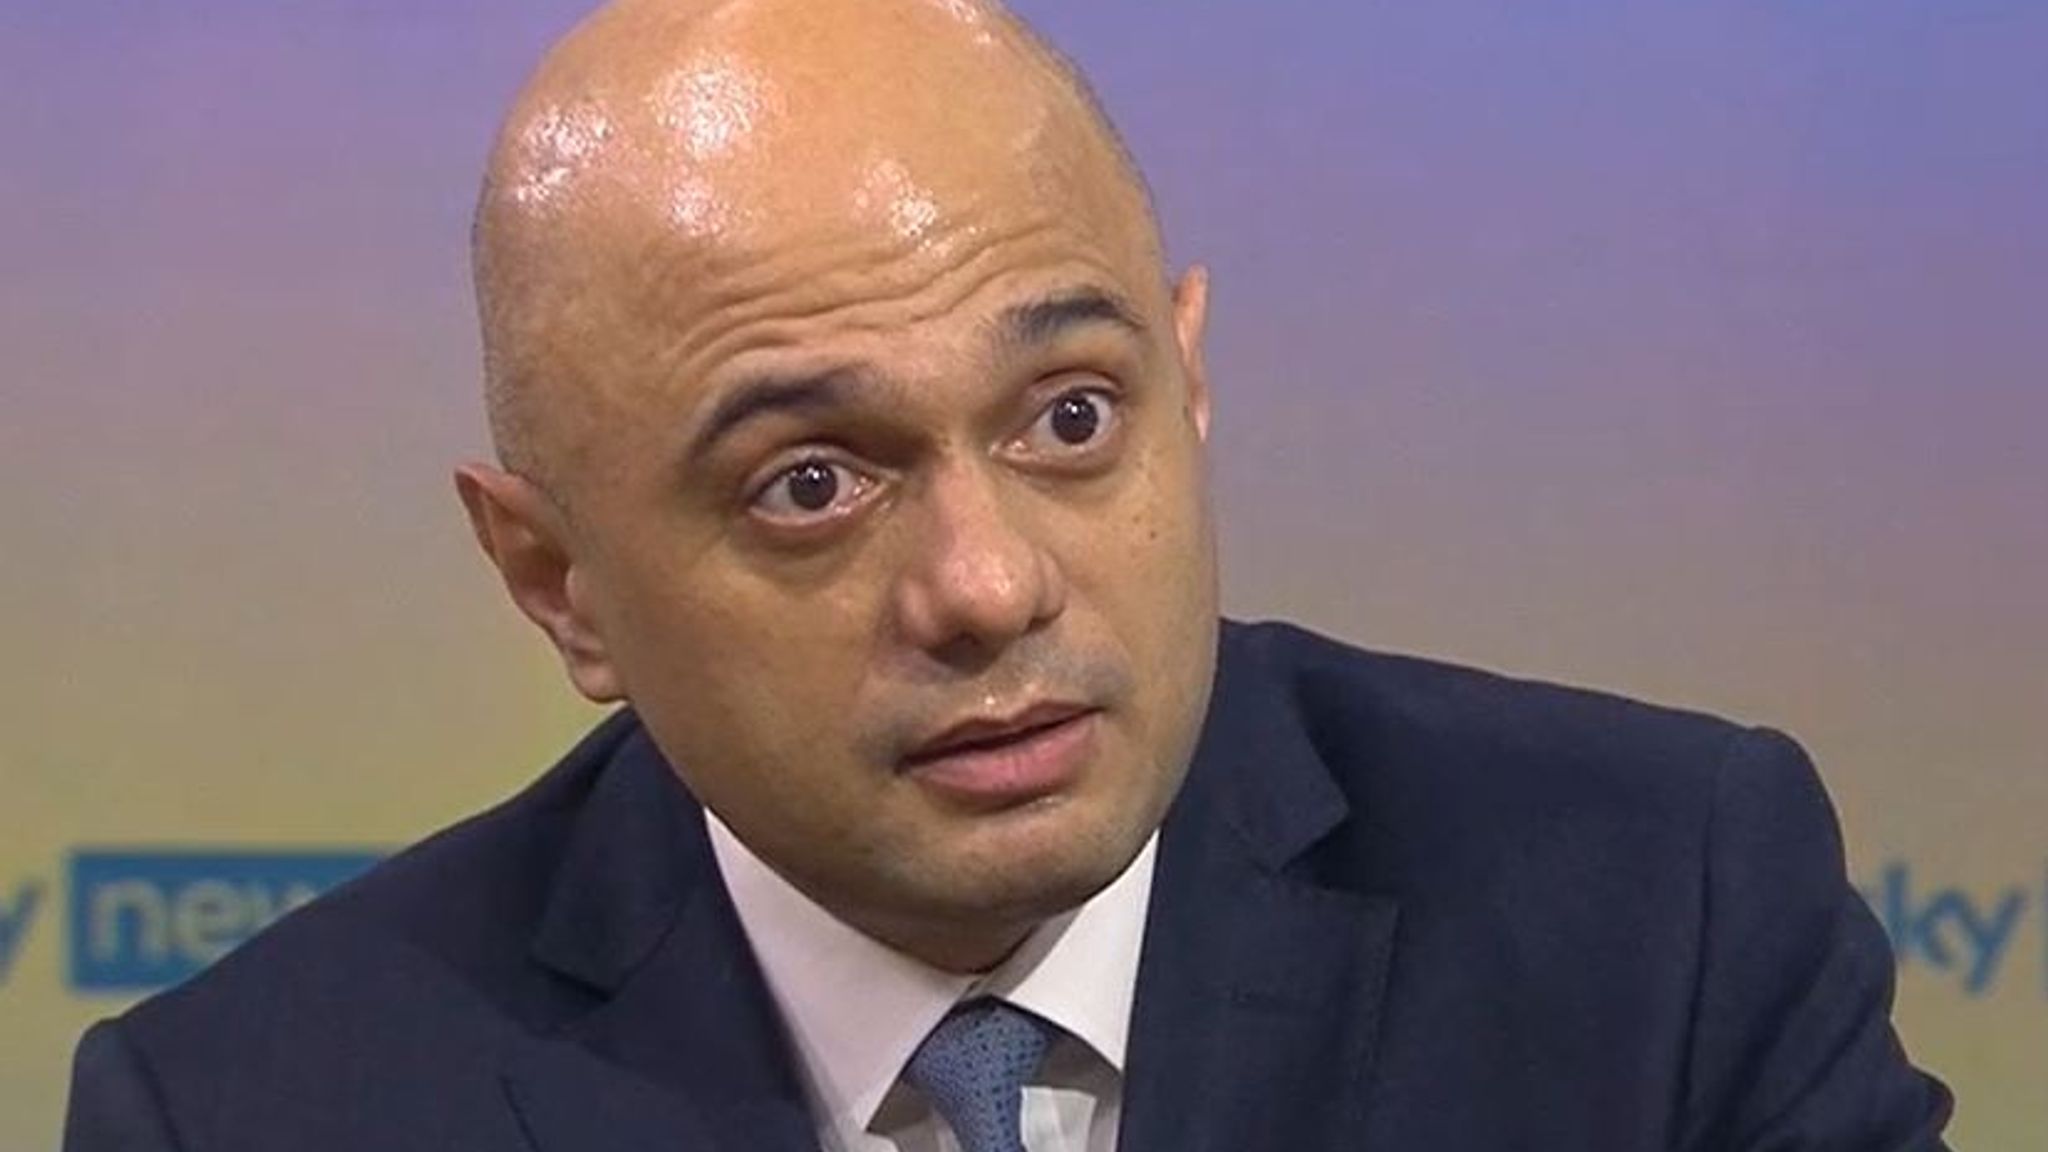 Allegra Stratton: Sajid Javid 'very upset' over video of Boris Johnson's adviser joking about lockdown Christmas party | Politics News | Sky News